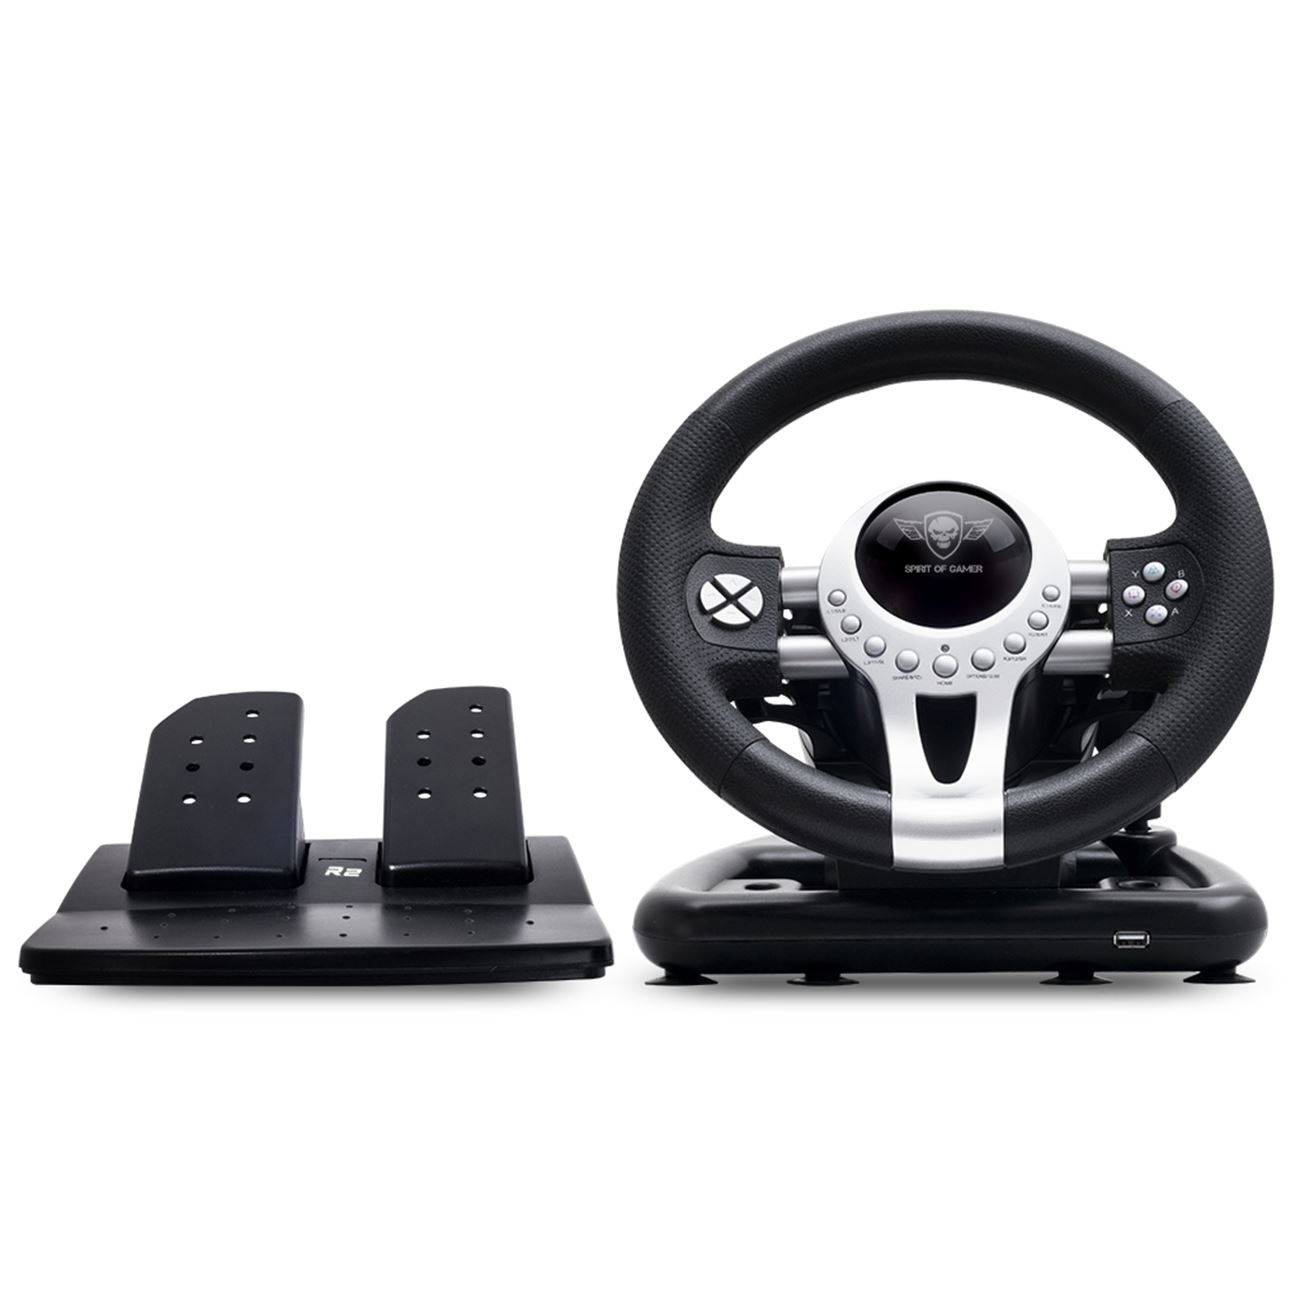 Pro Racing Wheel. Spirit of Gamer Race Wheel Pro. Microcon 2 Racing Wheel and Pedals отзывы владельцев. Картинг Gamer на все устройства.